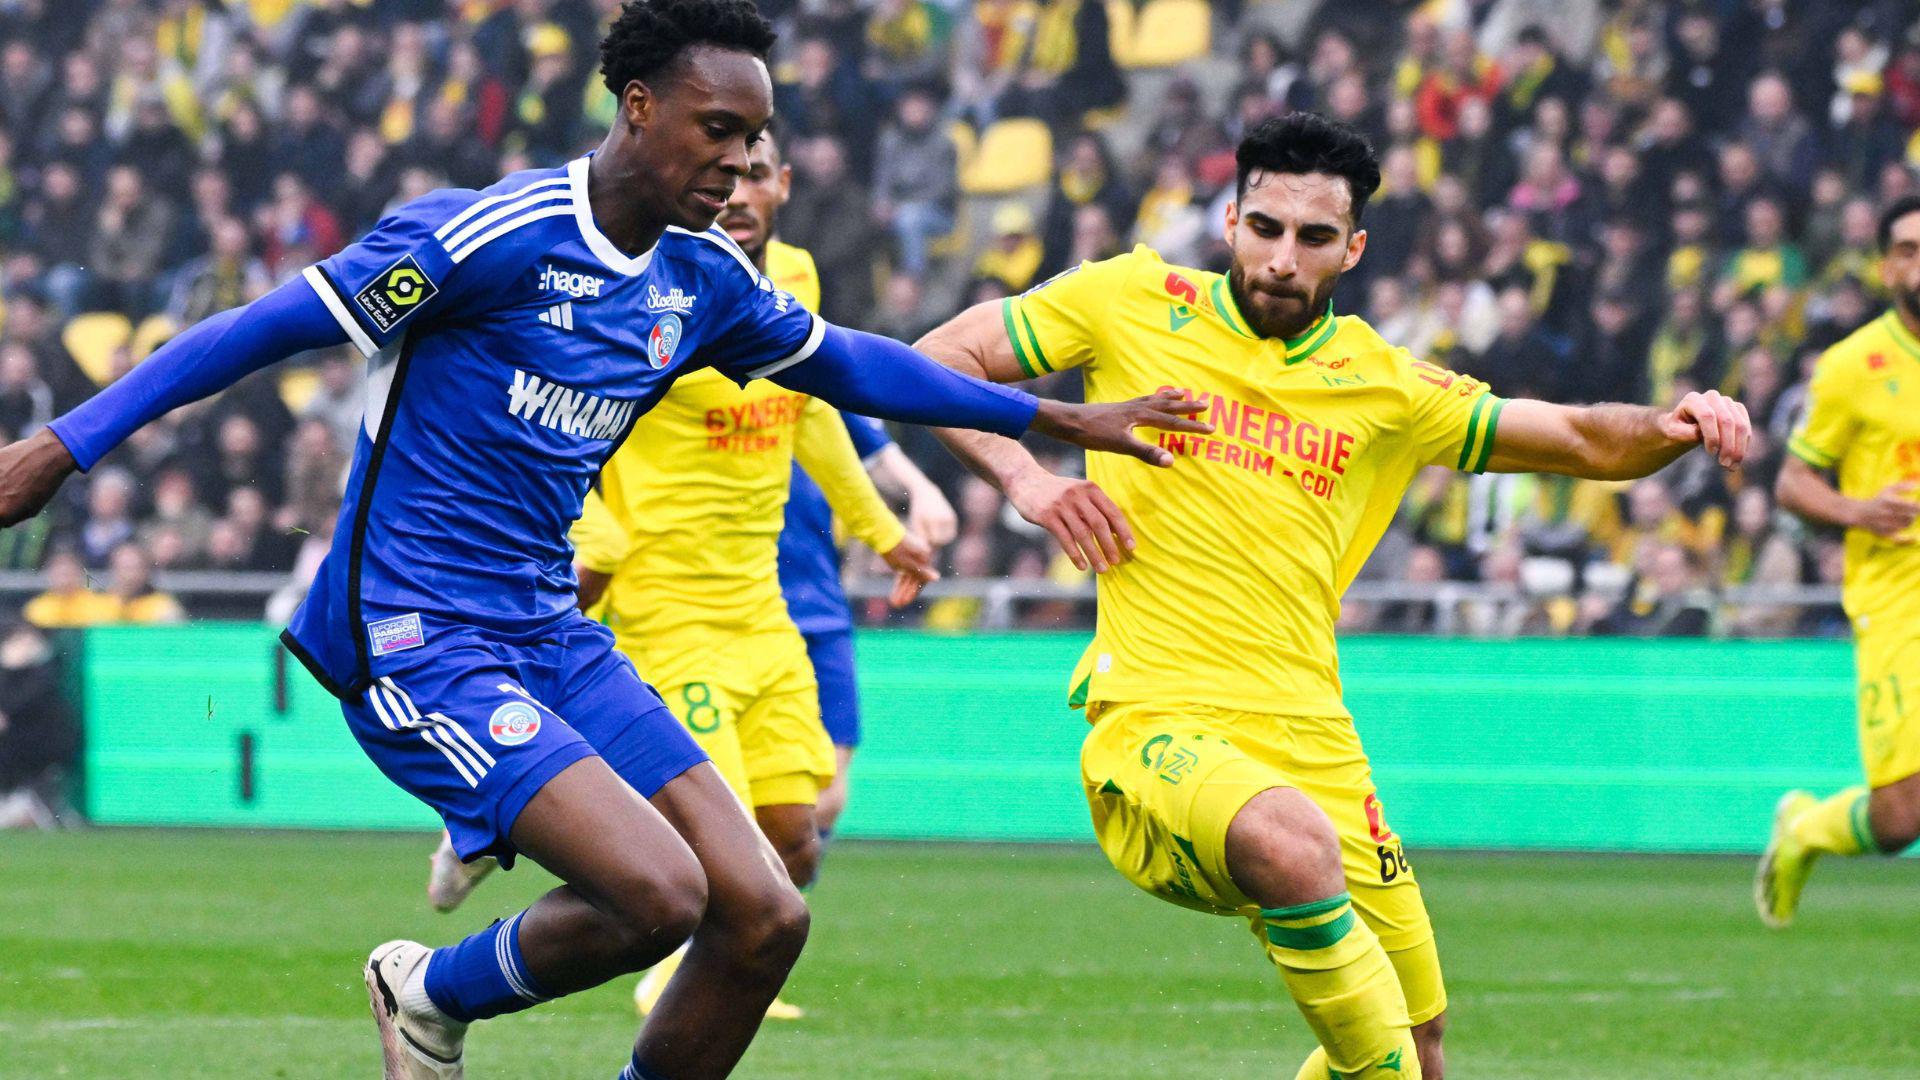 VIDEO | Ligue 1 Highlights: Nantes vs Strasbourg